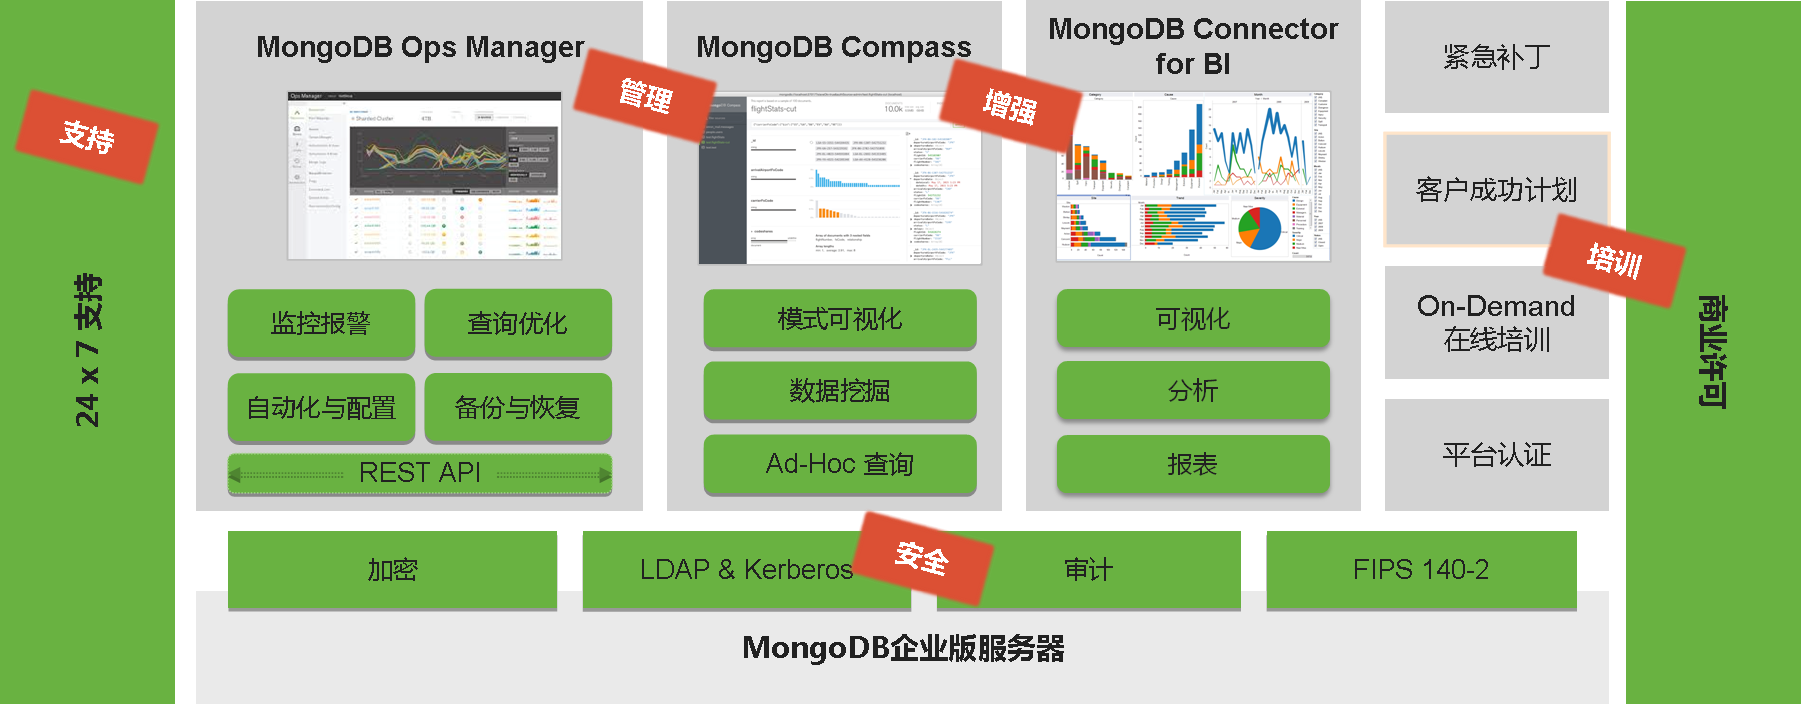 MongoDB 订阅服务